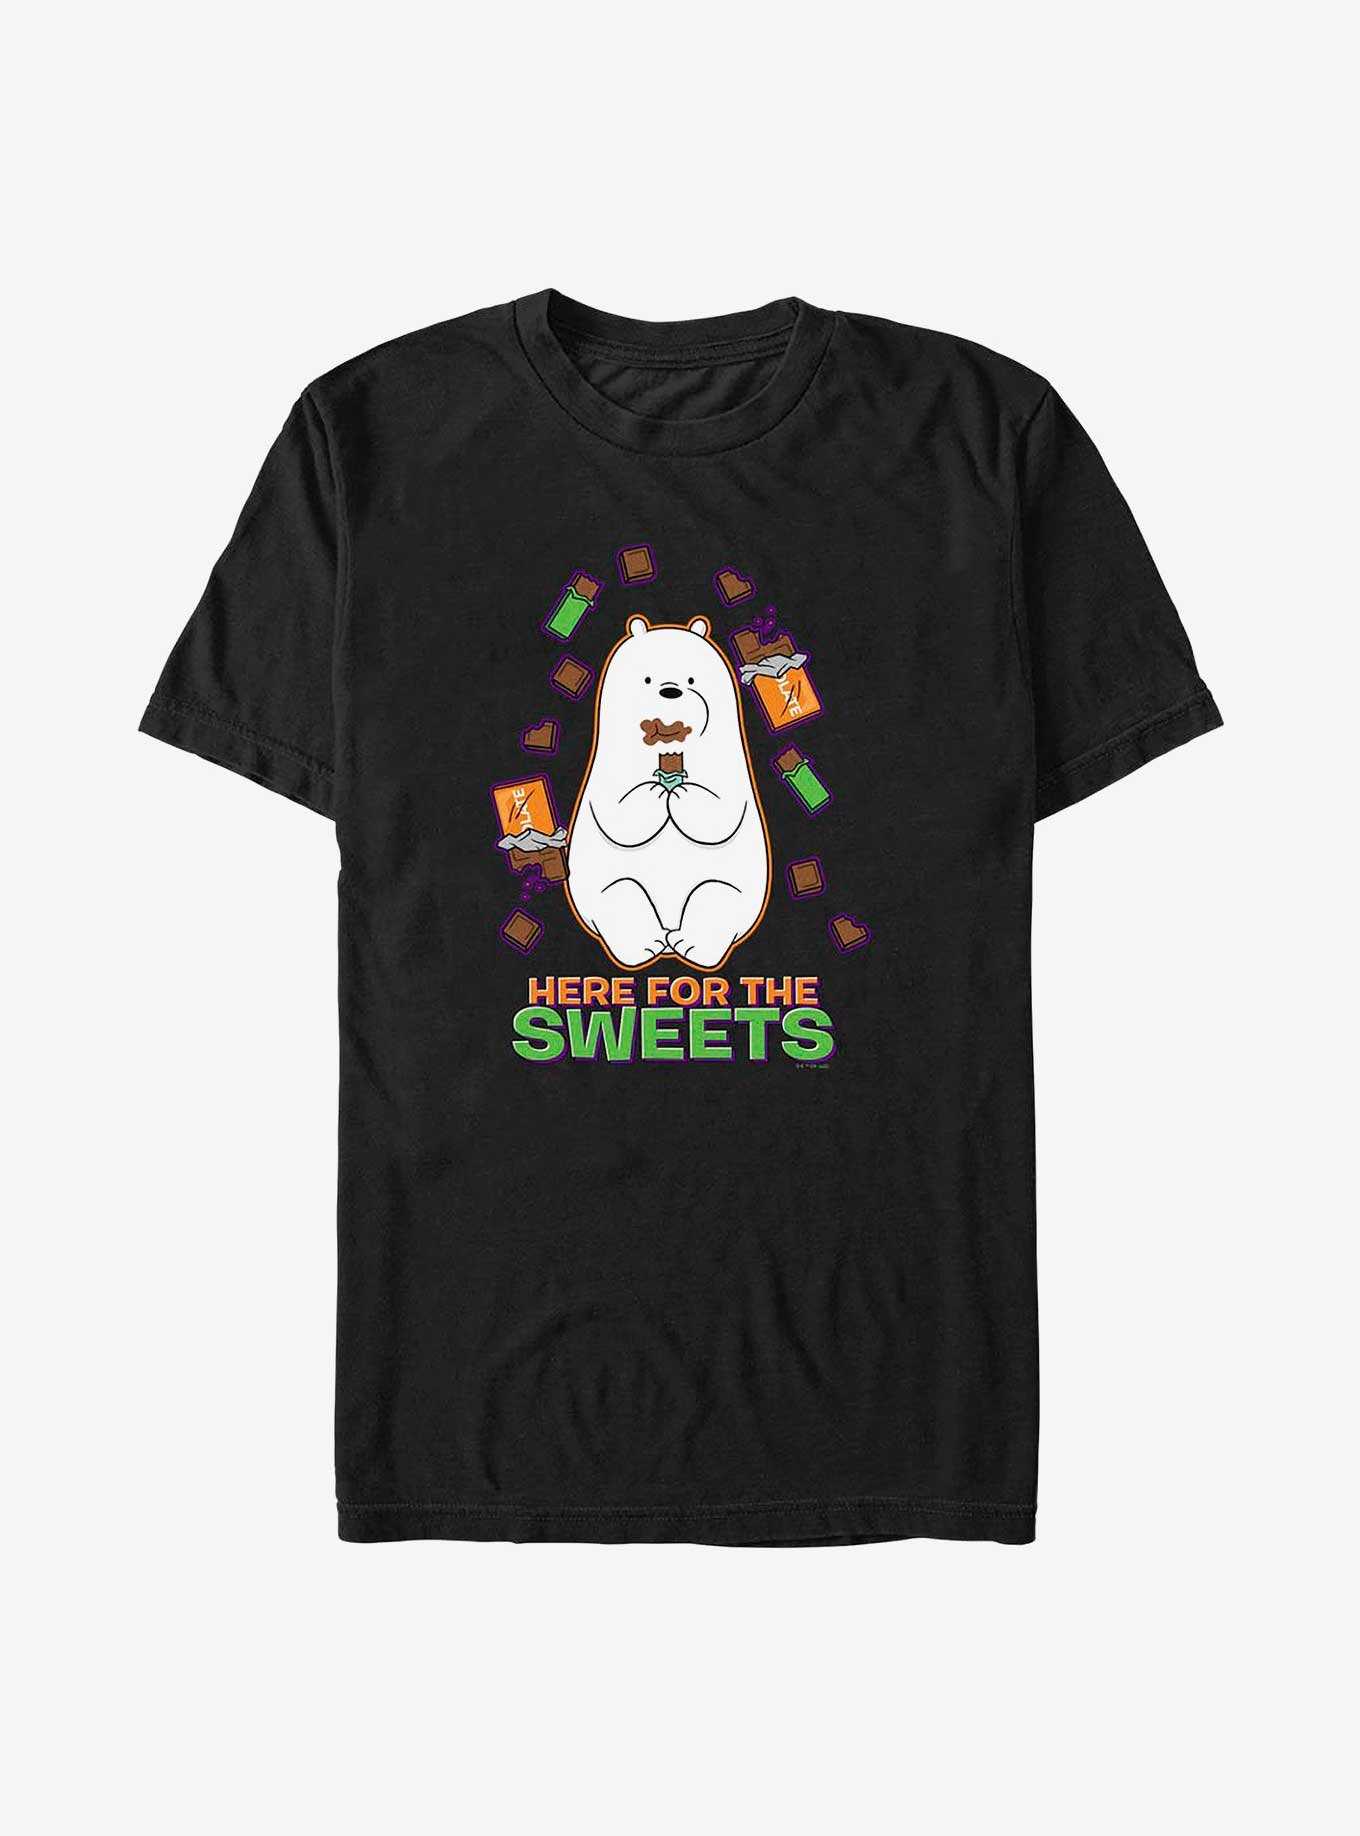 Cartoon Network We Bare Bears Sweet Bear T-Shirt, , hi-res